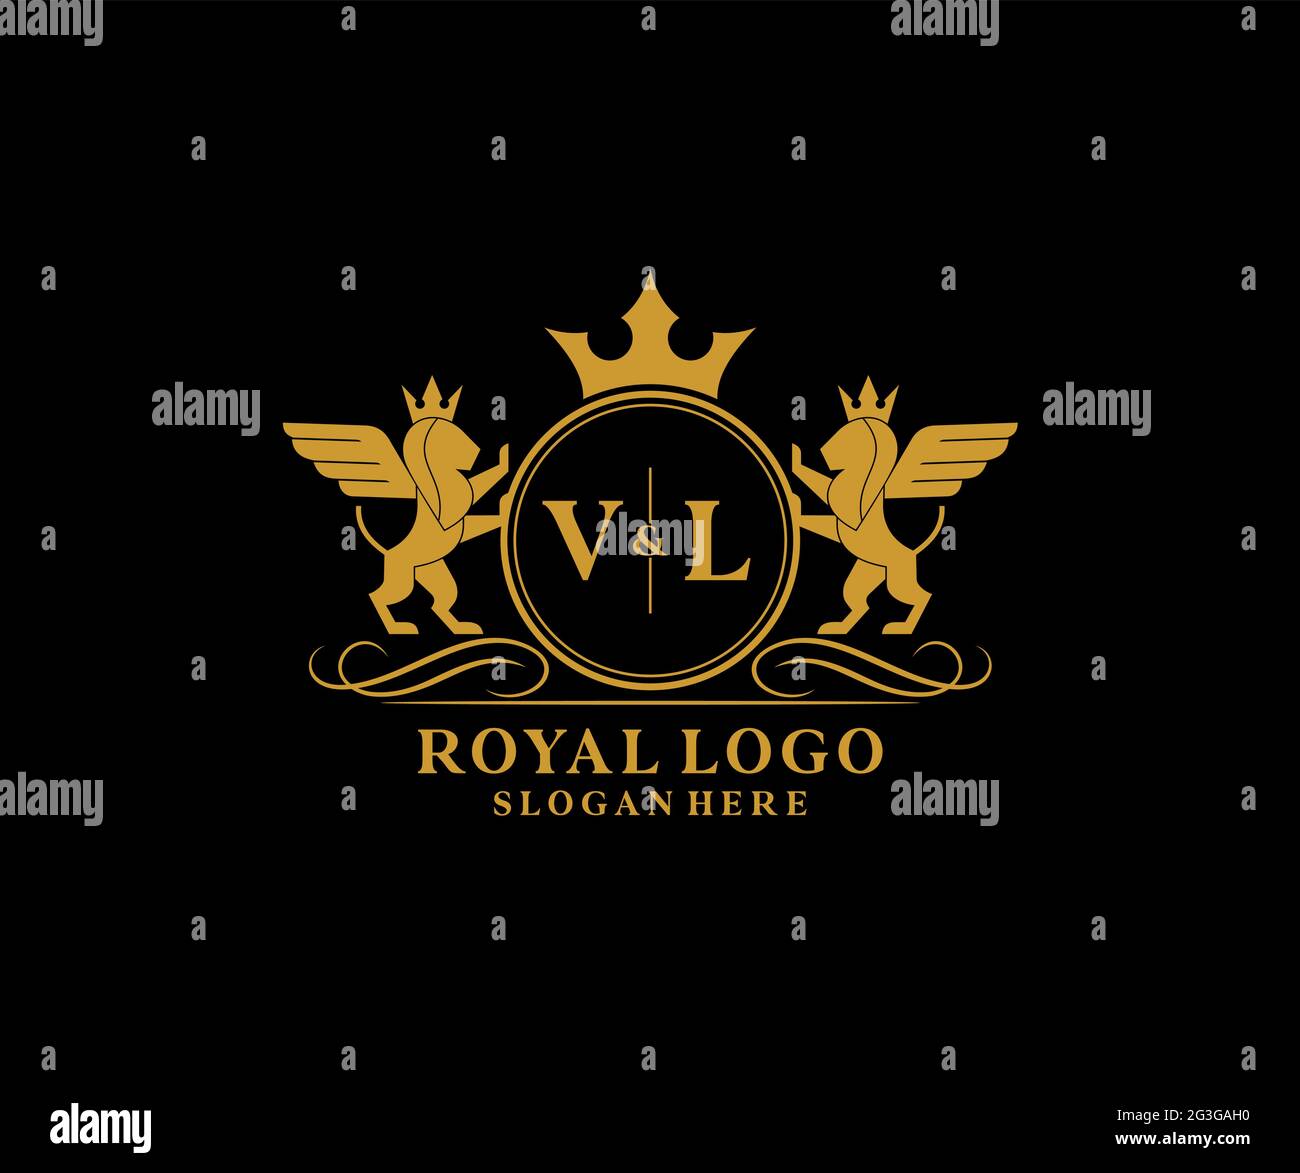 fashion vl logo